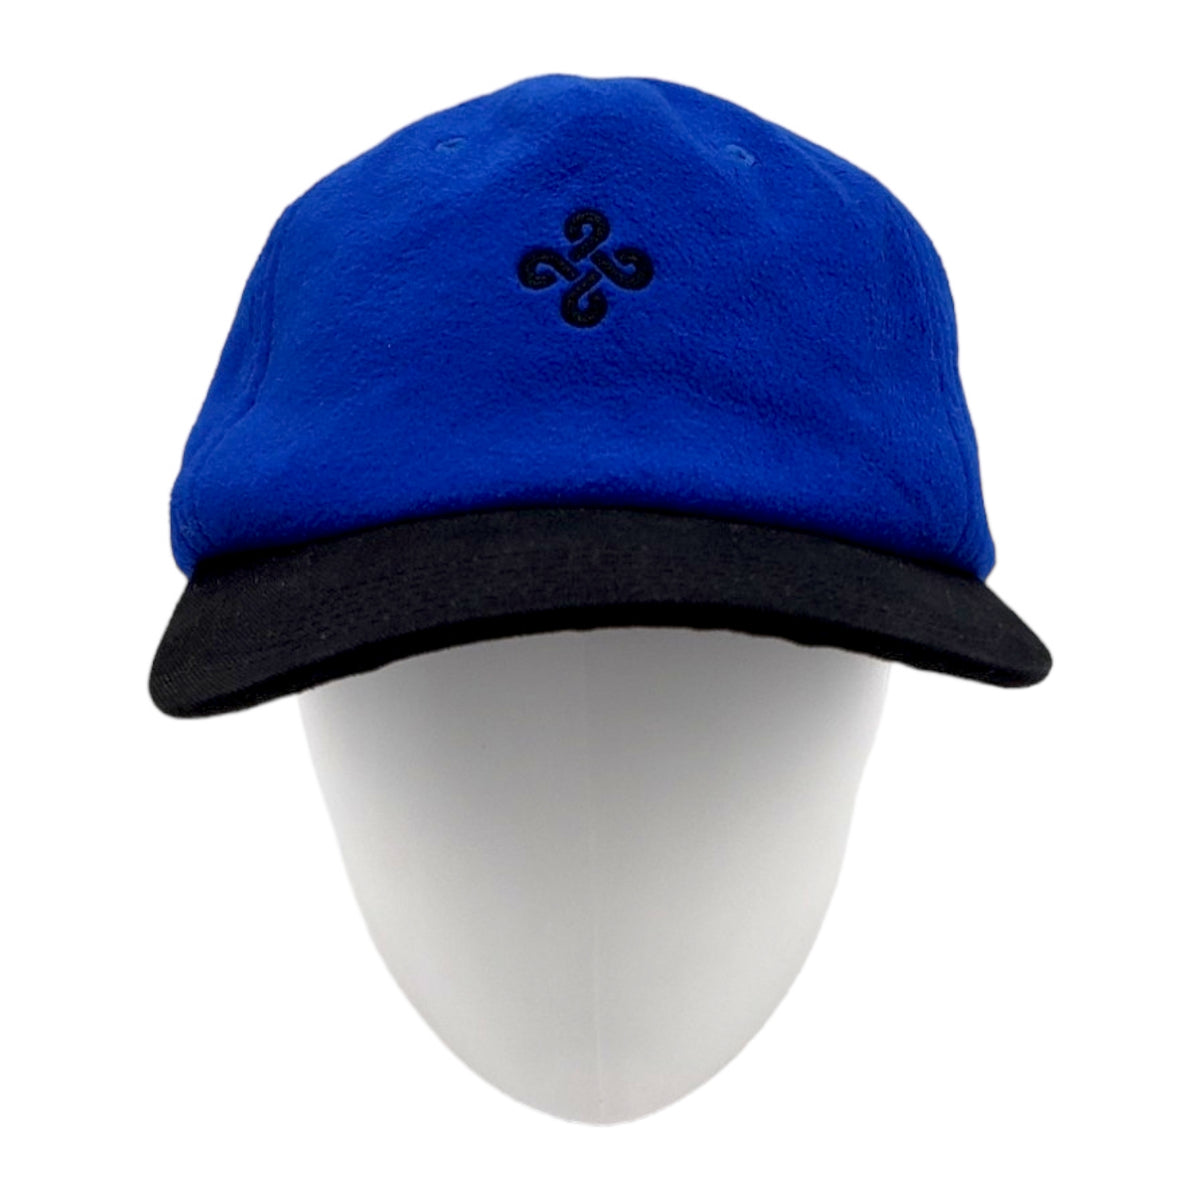 Garbstore Blue/Black Soft Adjustable Cap